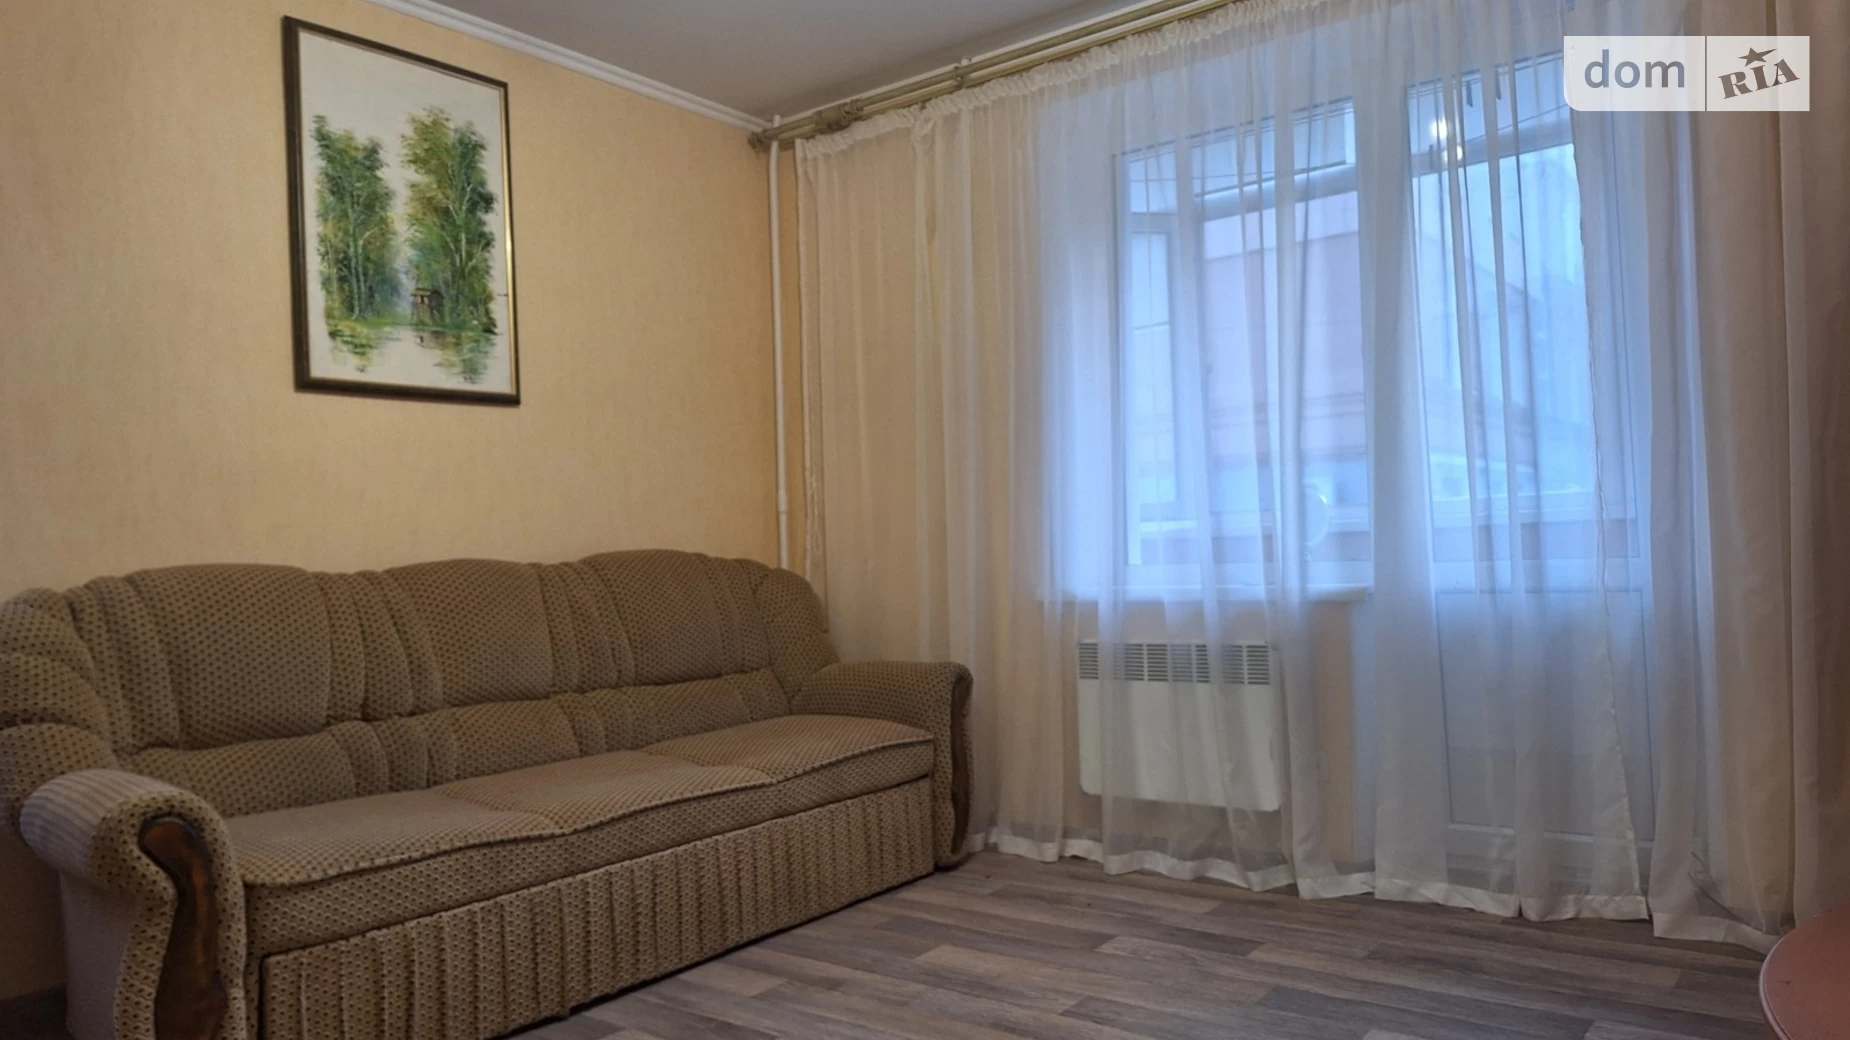 Продається 2-кімнатна квартира 40 кв. м у Кропивницькому, вул. Степана Чобану(Добровольського), 13 - фото 3